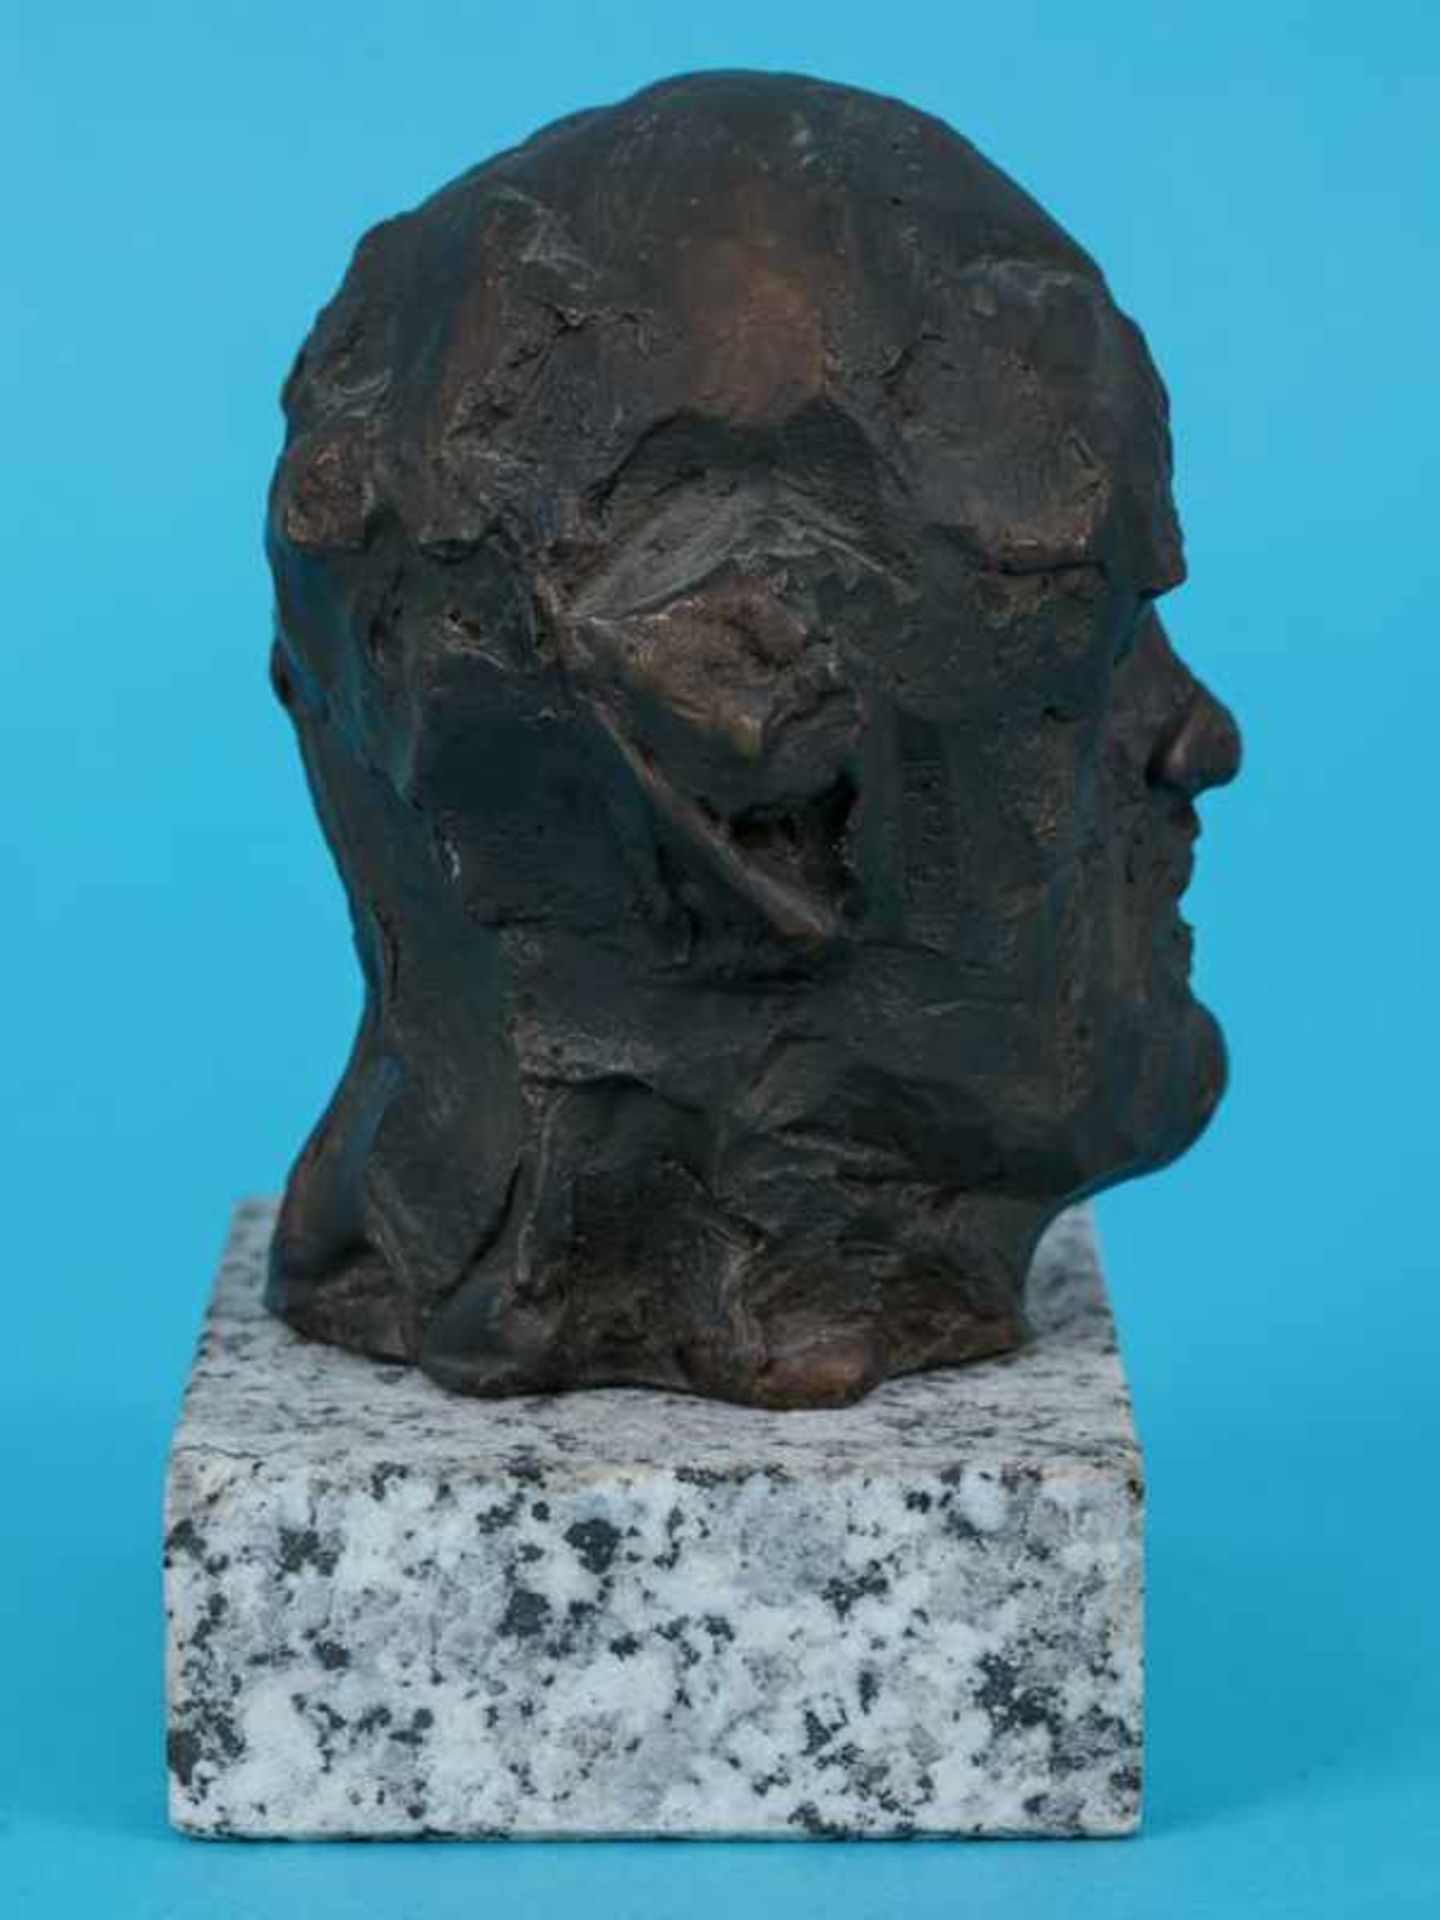 Hrdlicka, Alfred (1928 - 2009). Bronzeplastik "Selbstportrait", ca. 1986; Kopfplastik, innen hohl - Bild 5 aus 9